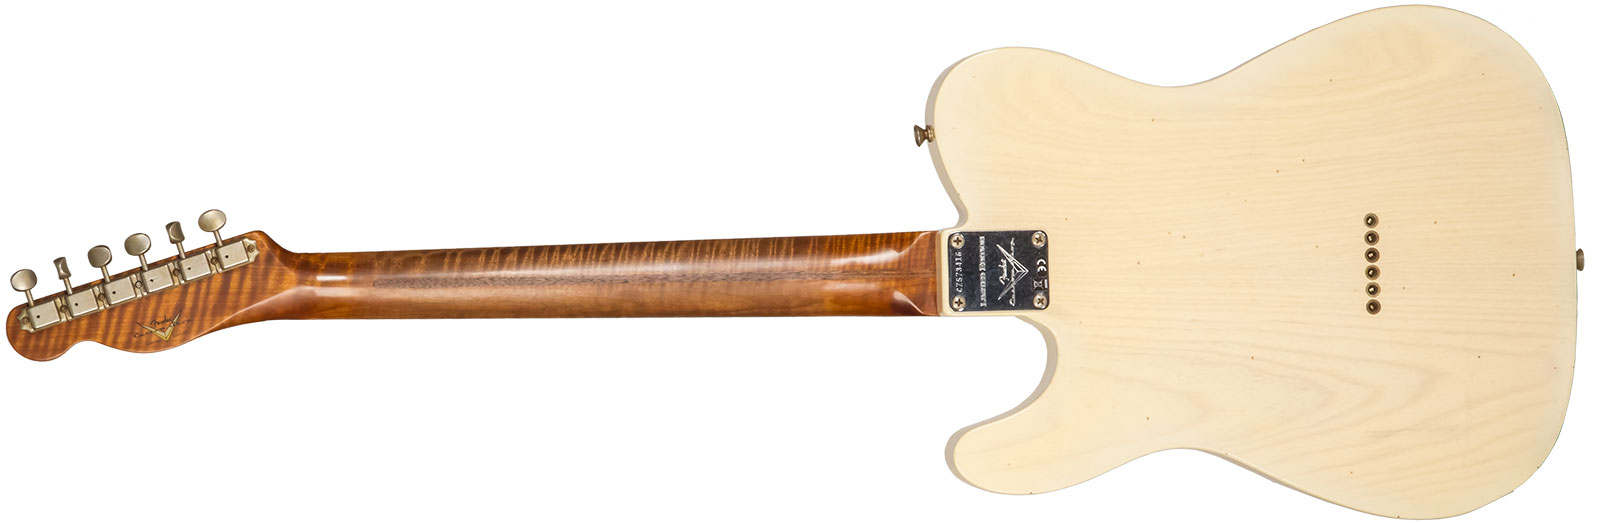 Fender Custom Shop Tele 1955 2s Ht Mn #cz573416 - Journeyman Relic Nocaster Blonde - Tel shape electric guitar - Variation 1